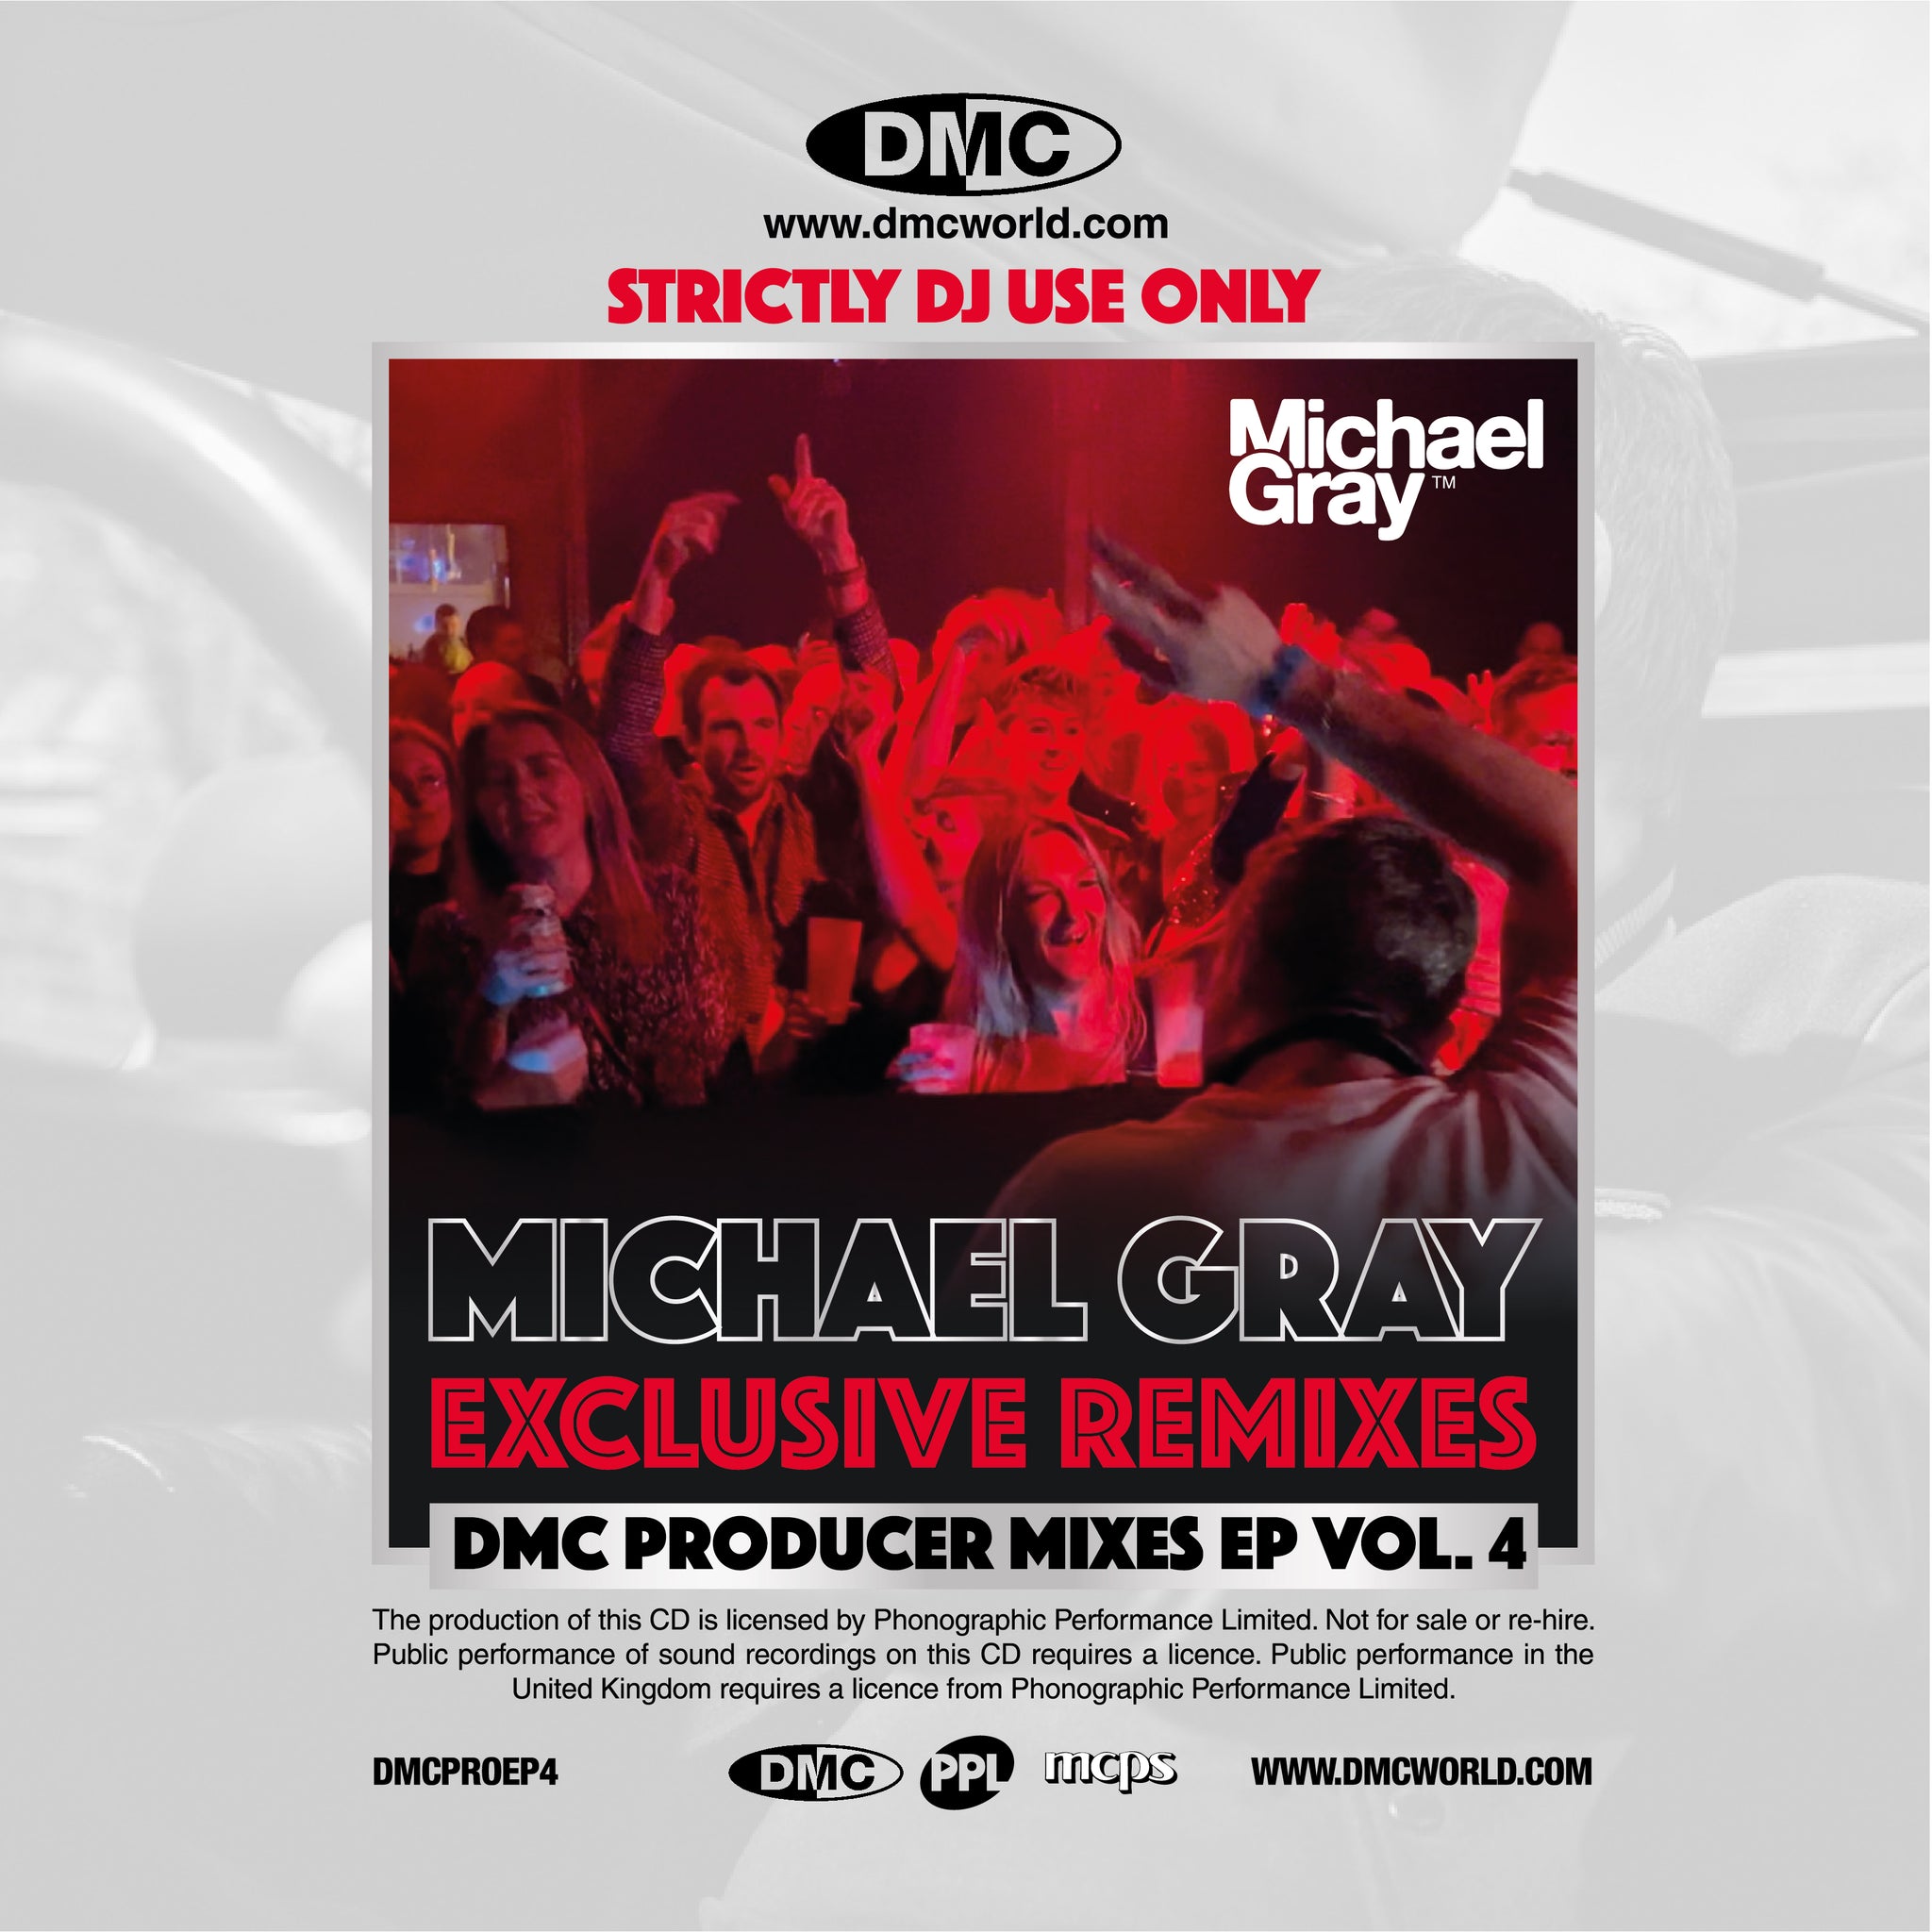 DMC Producer Mixes Michael Gray CD EP Volume 4 - OUT NOW